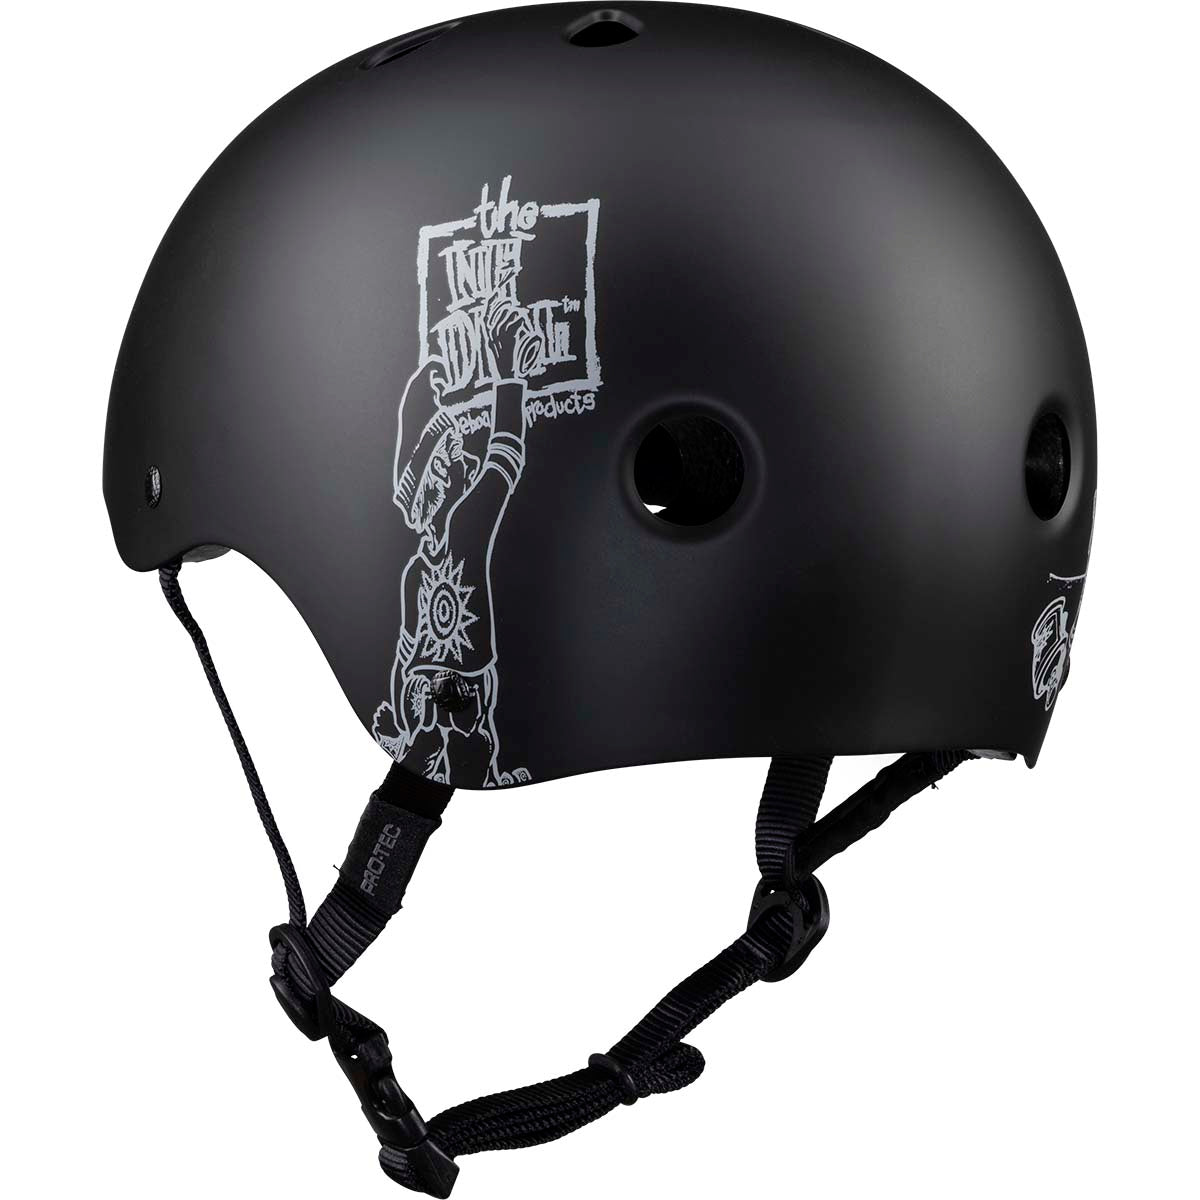 Pro-Tec x New Deal Spray Classic Certified Helmet - Black image 2